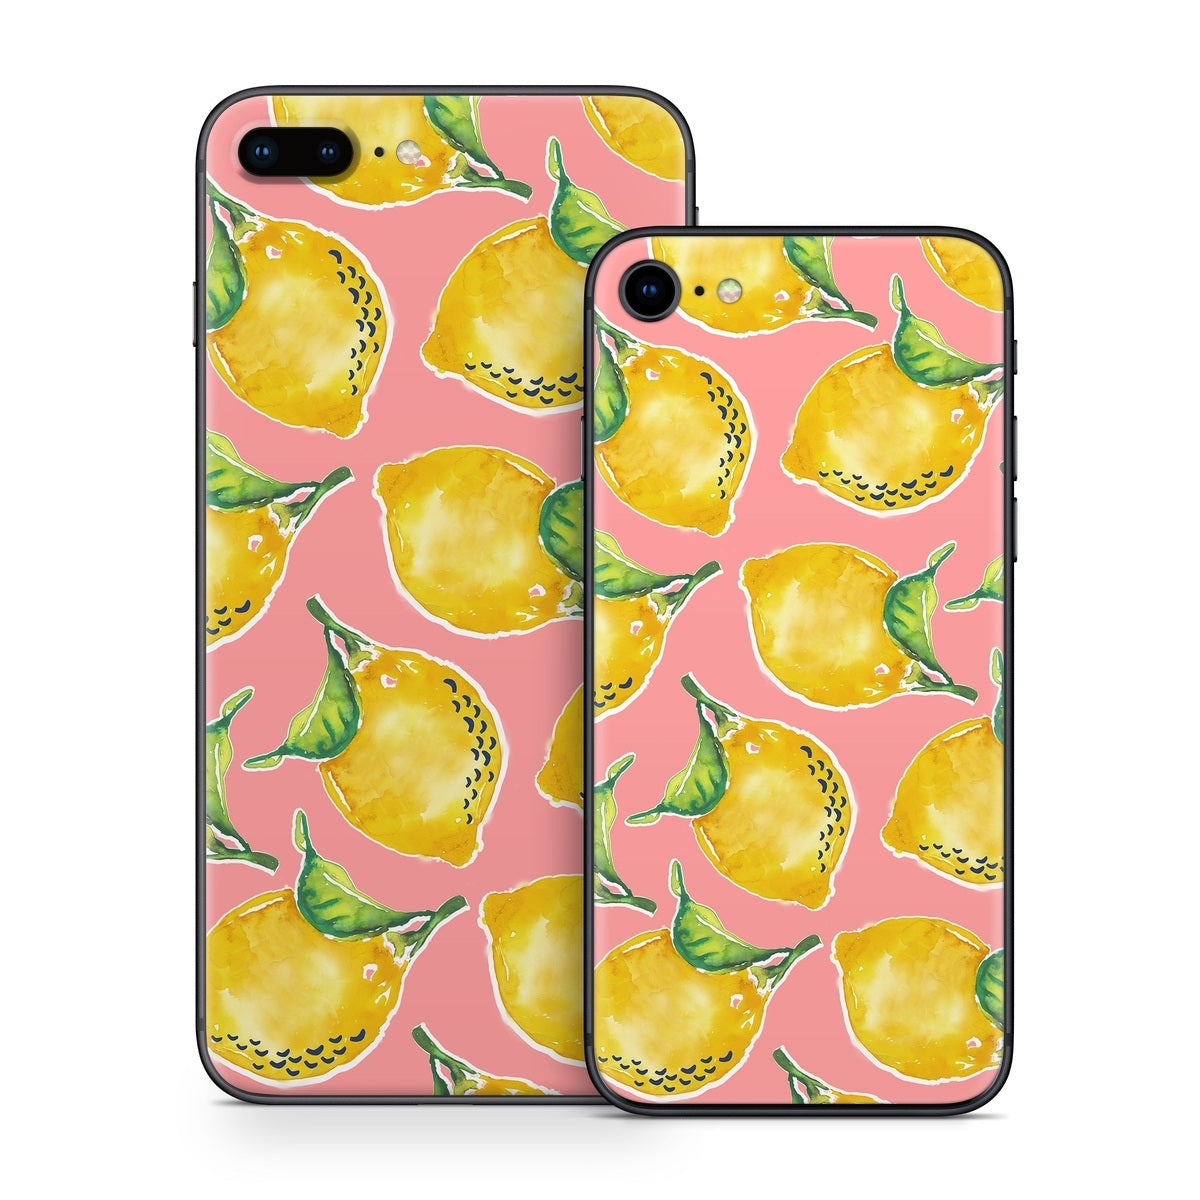 Lemon - Apple iPhone 8 Skin